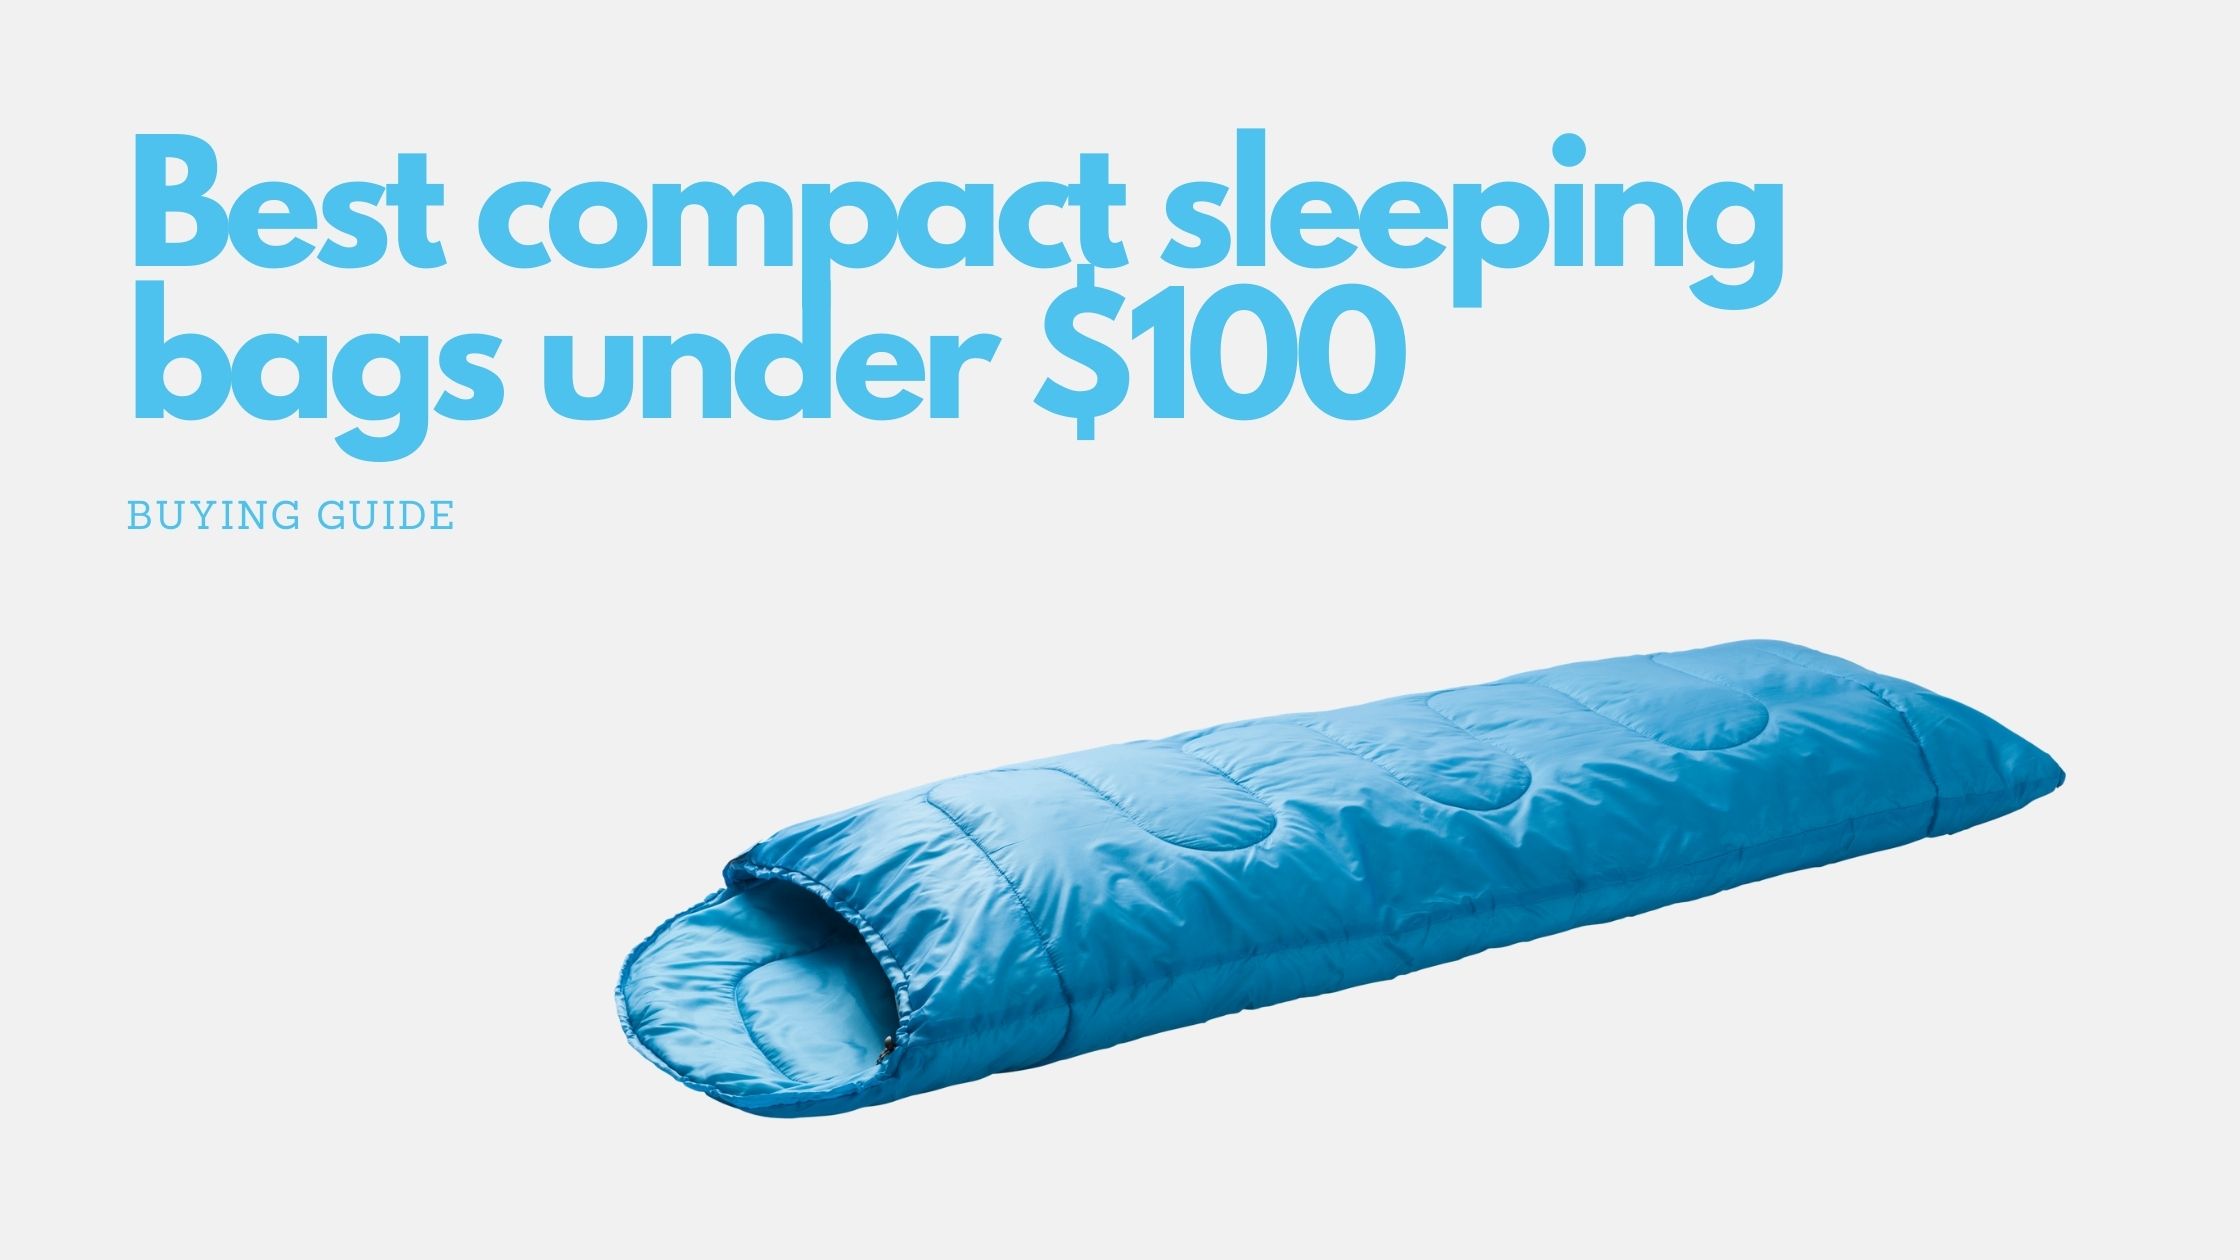 8 Best compact sleeping bags under $100